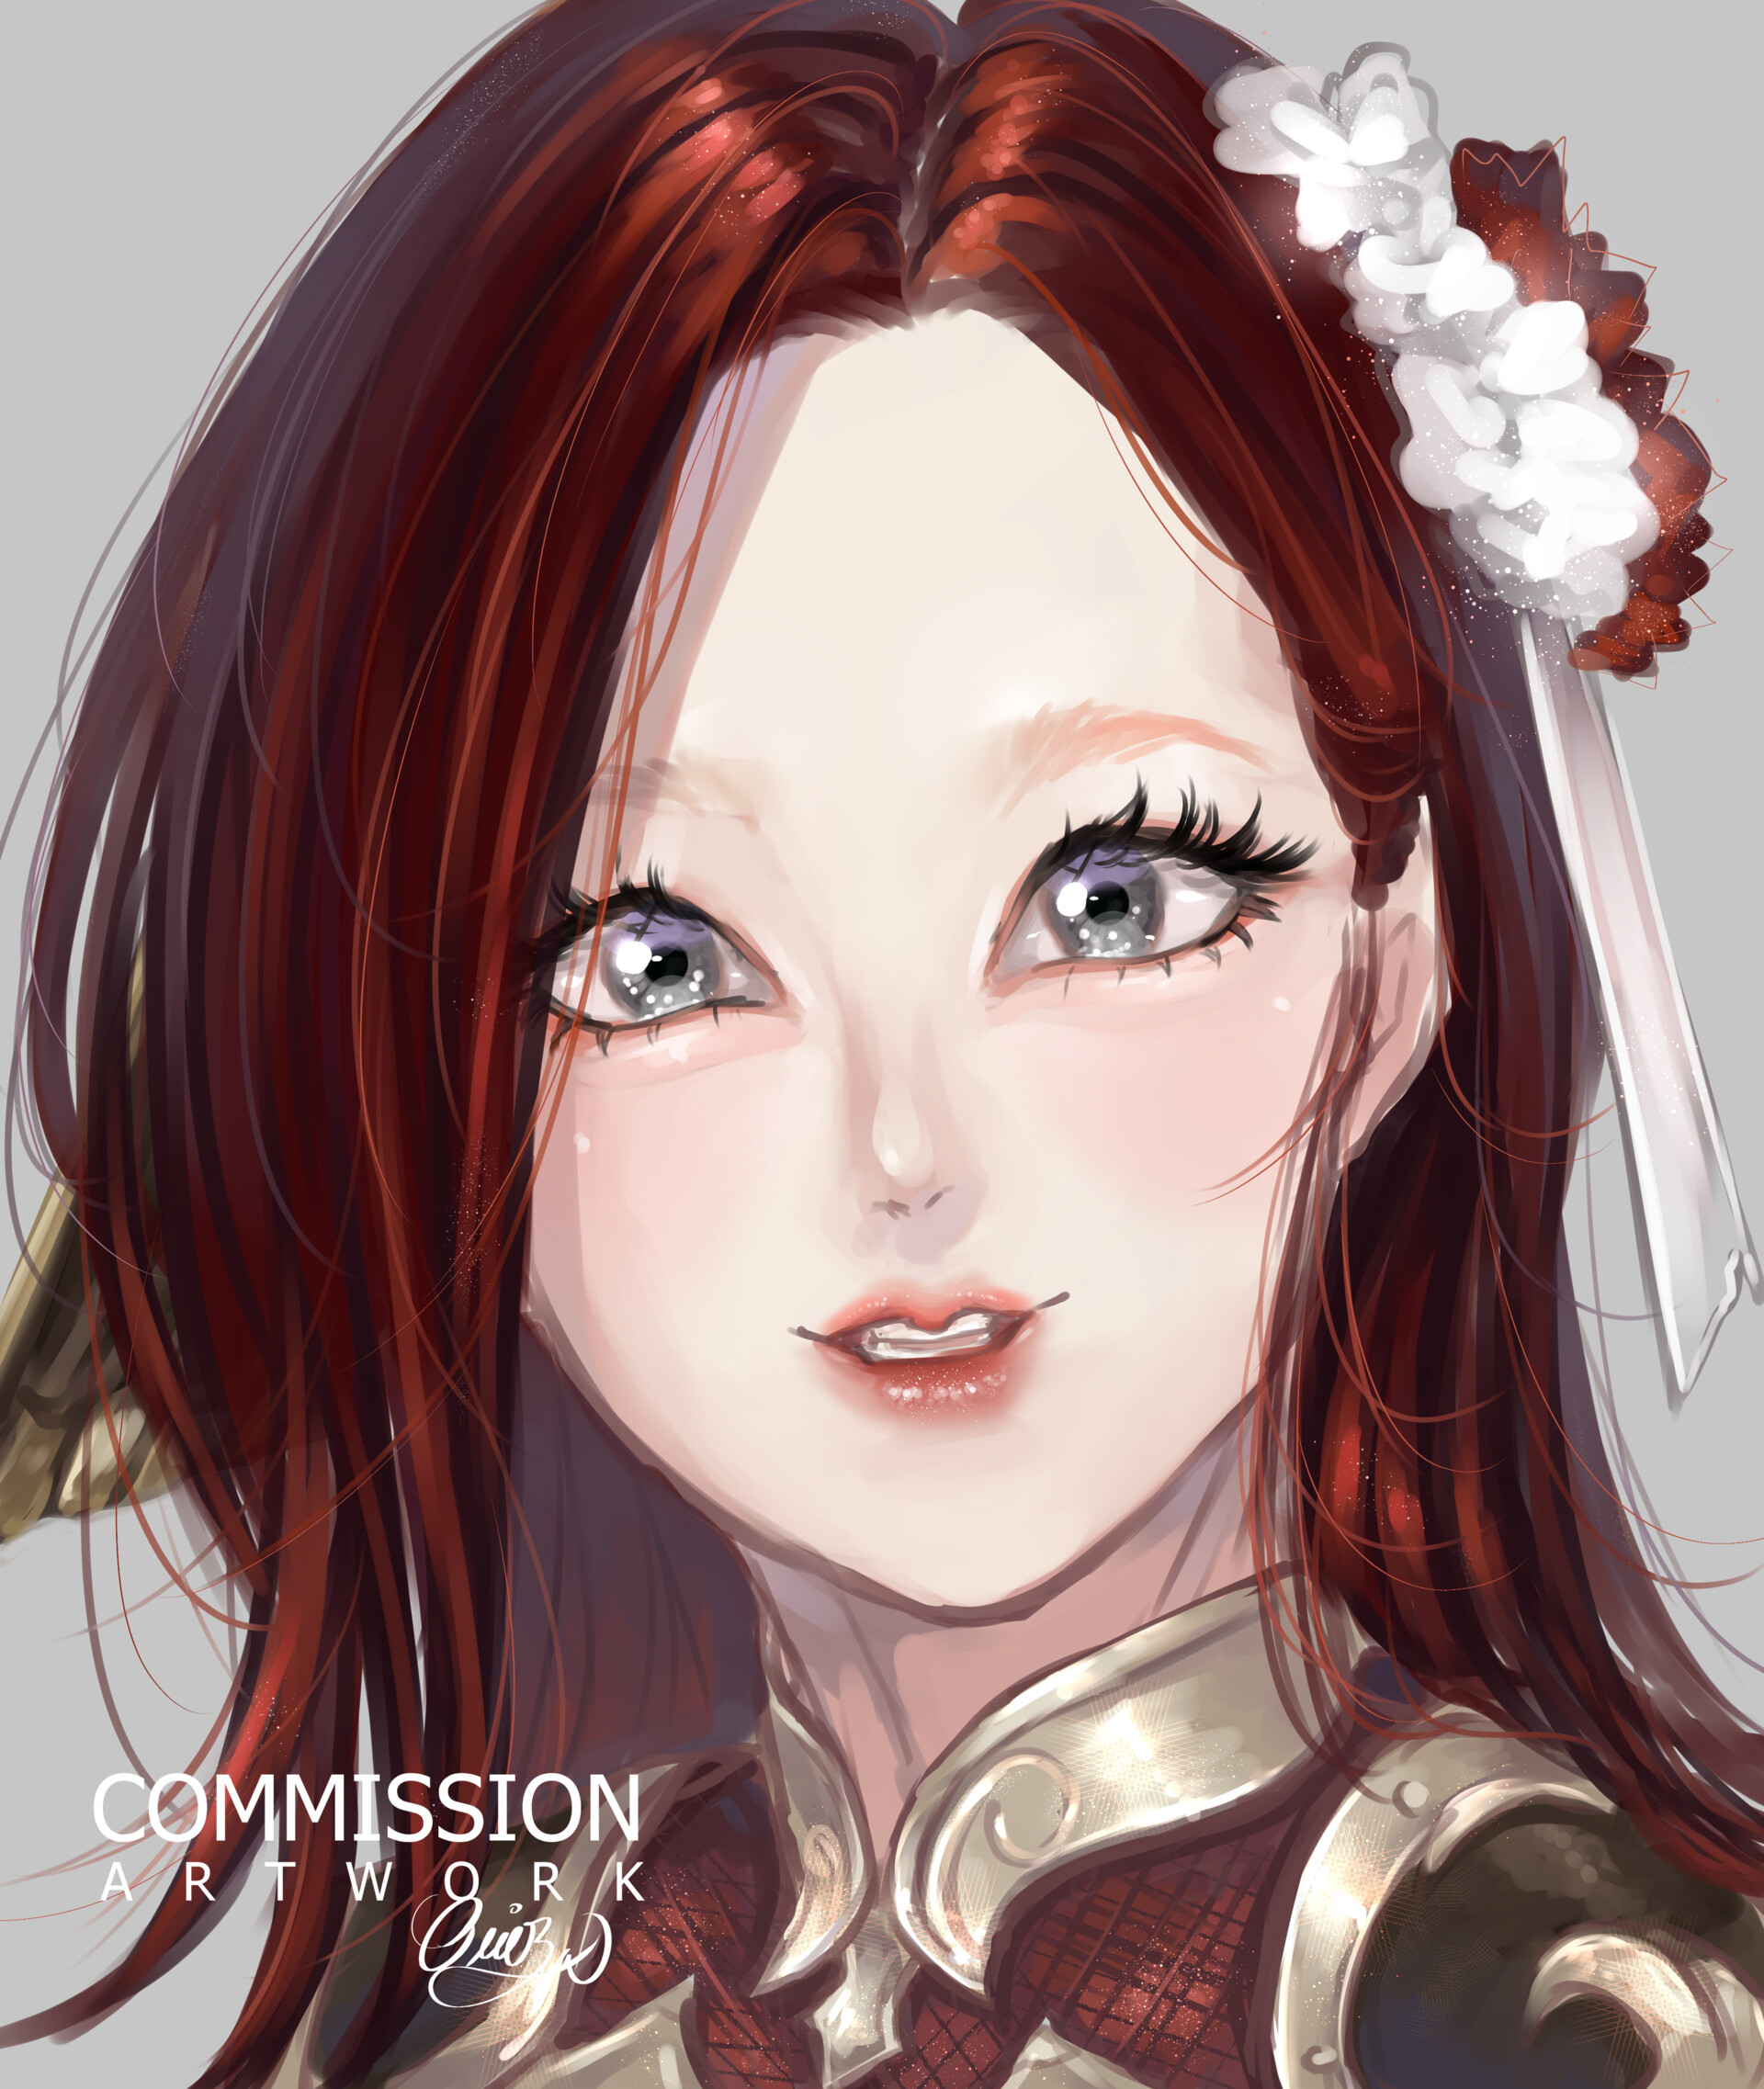 ArtStation - Red Head - Commission